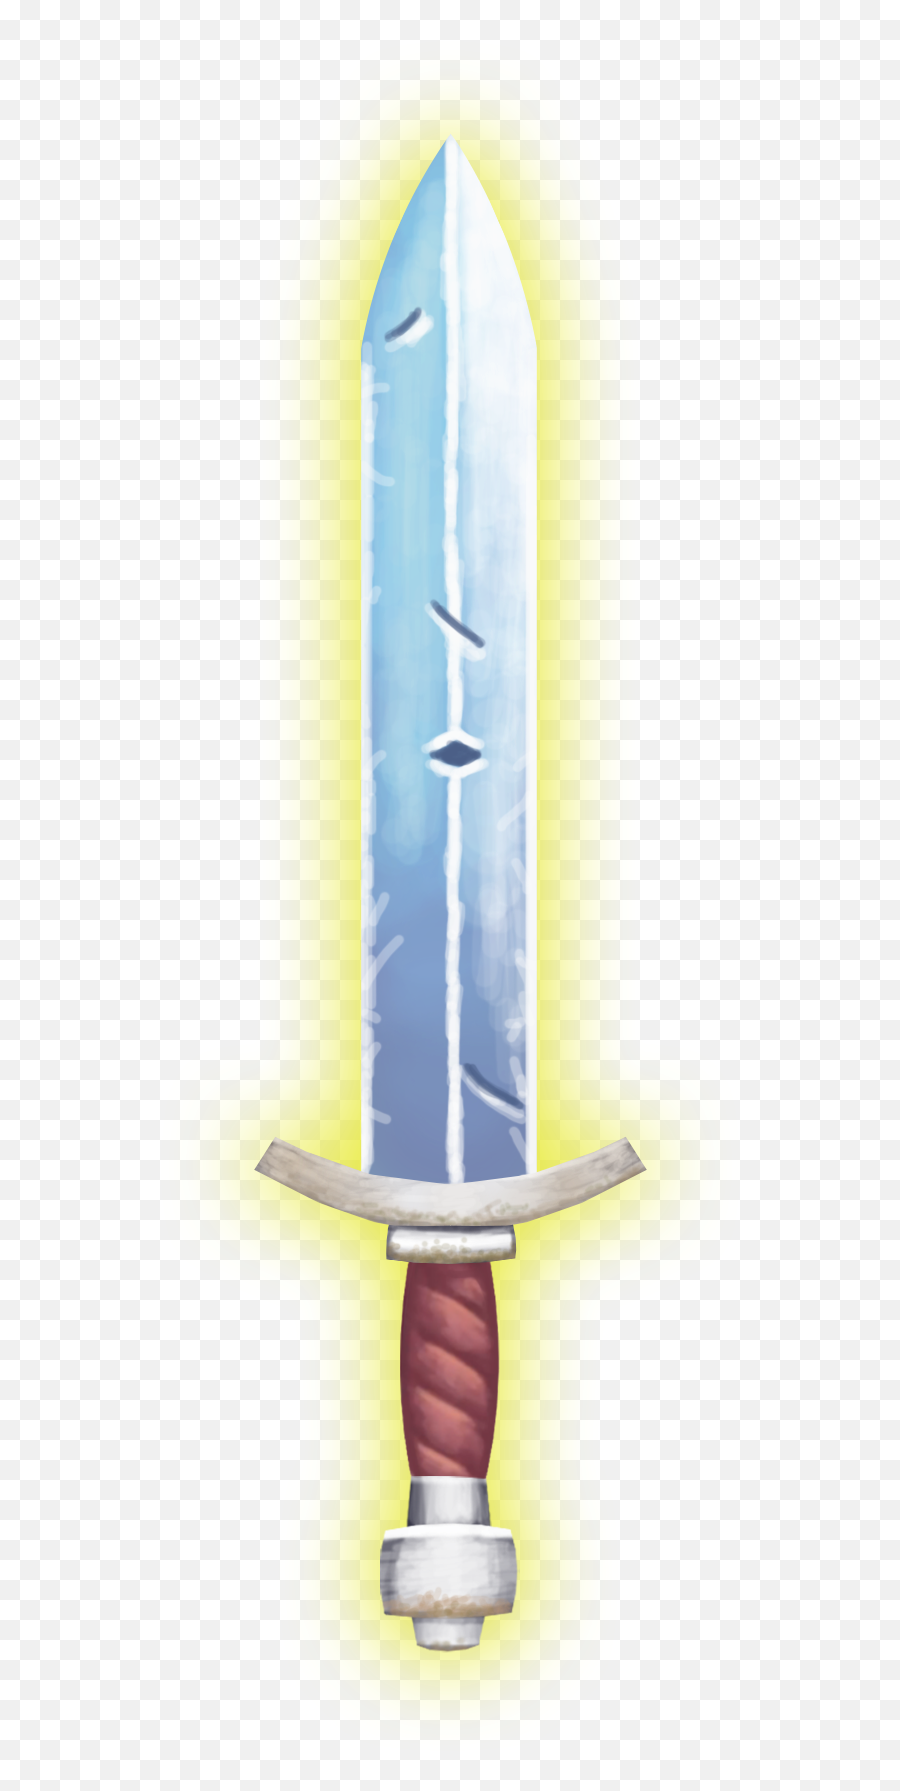 Drew A Diamond Sword 3 Hours - Collectible Sword Png,Diamond Sword Transparent